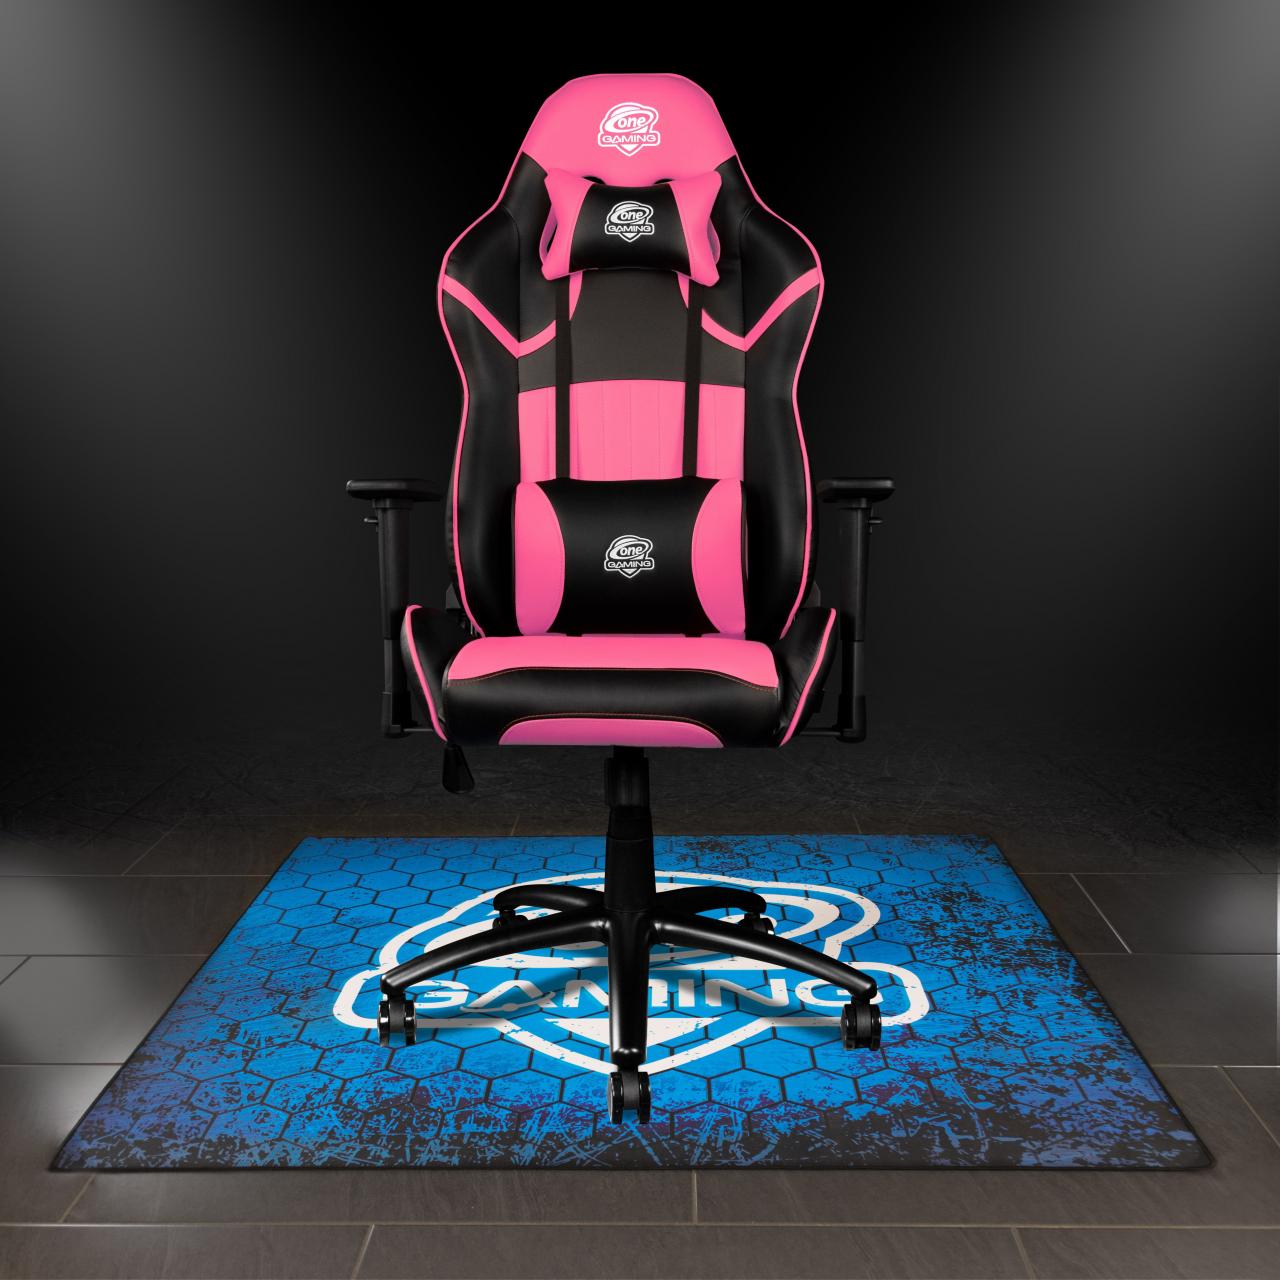 Gaming Stuhl ONE GAMING Chair Pro Pink